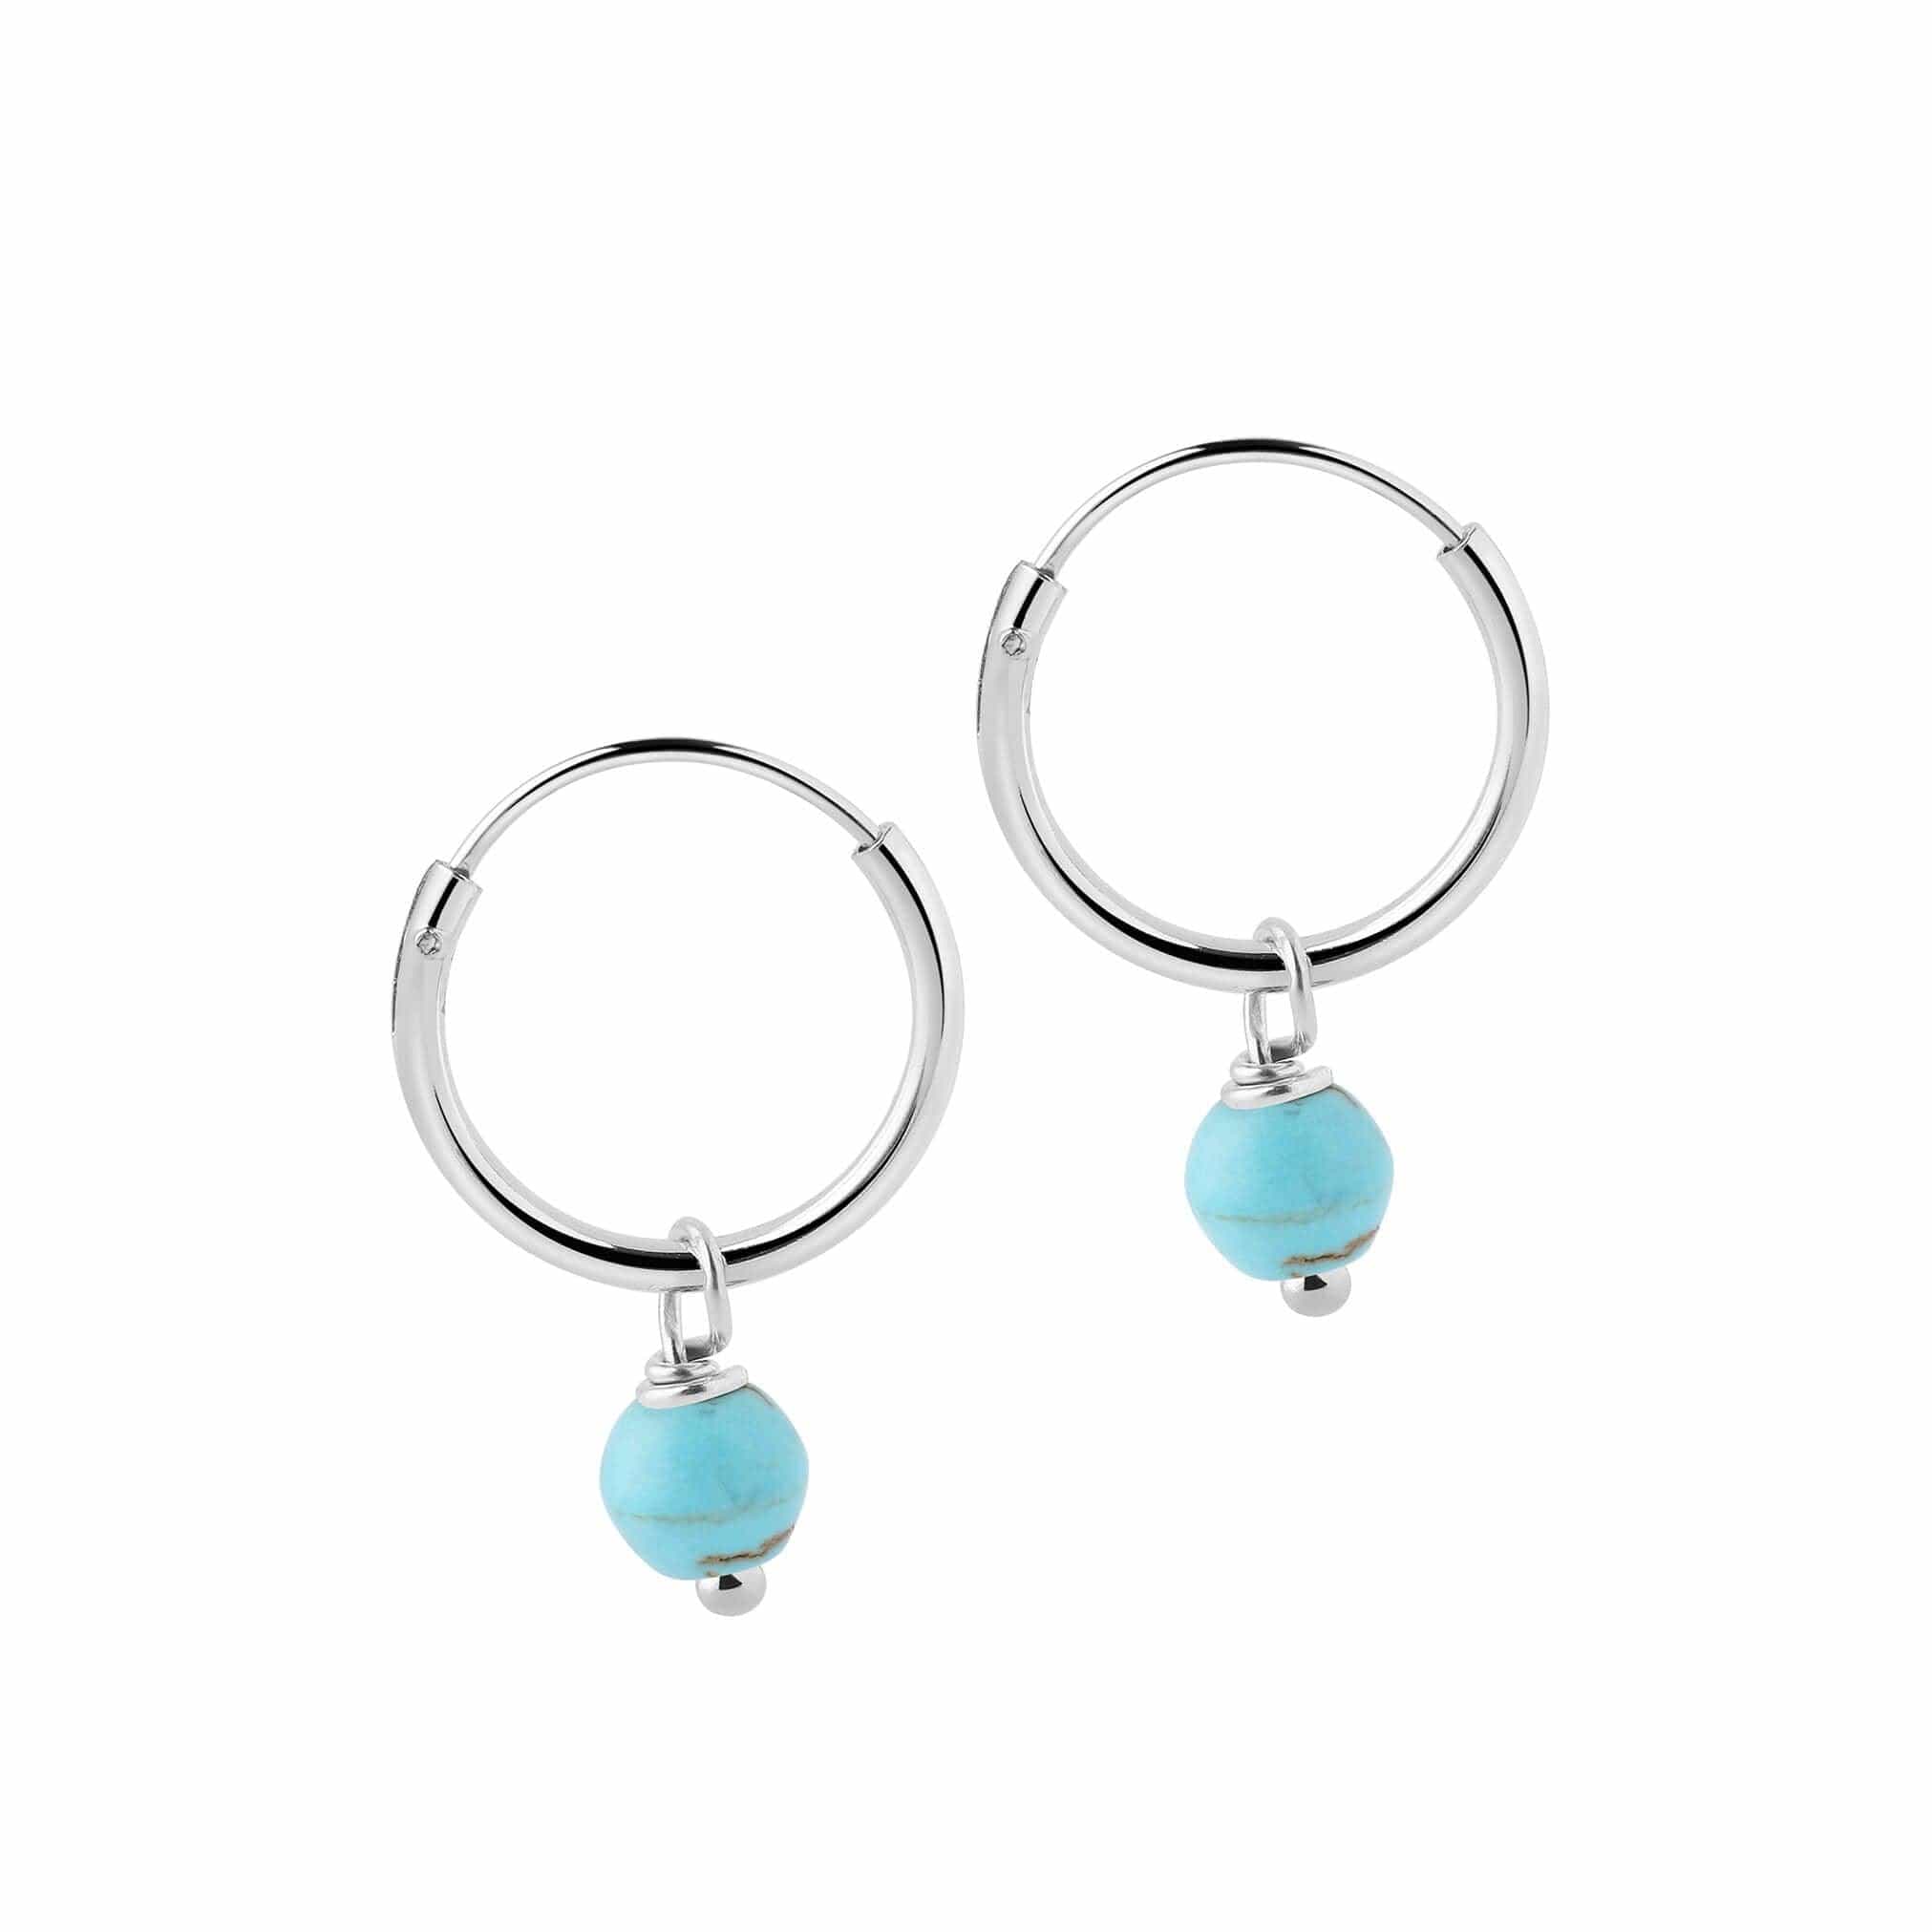 12mm Silver Hoop Earrings Turquoise Blue Stone